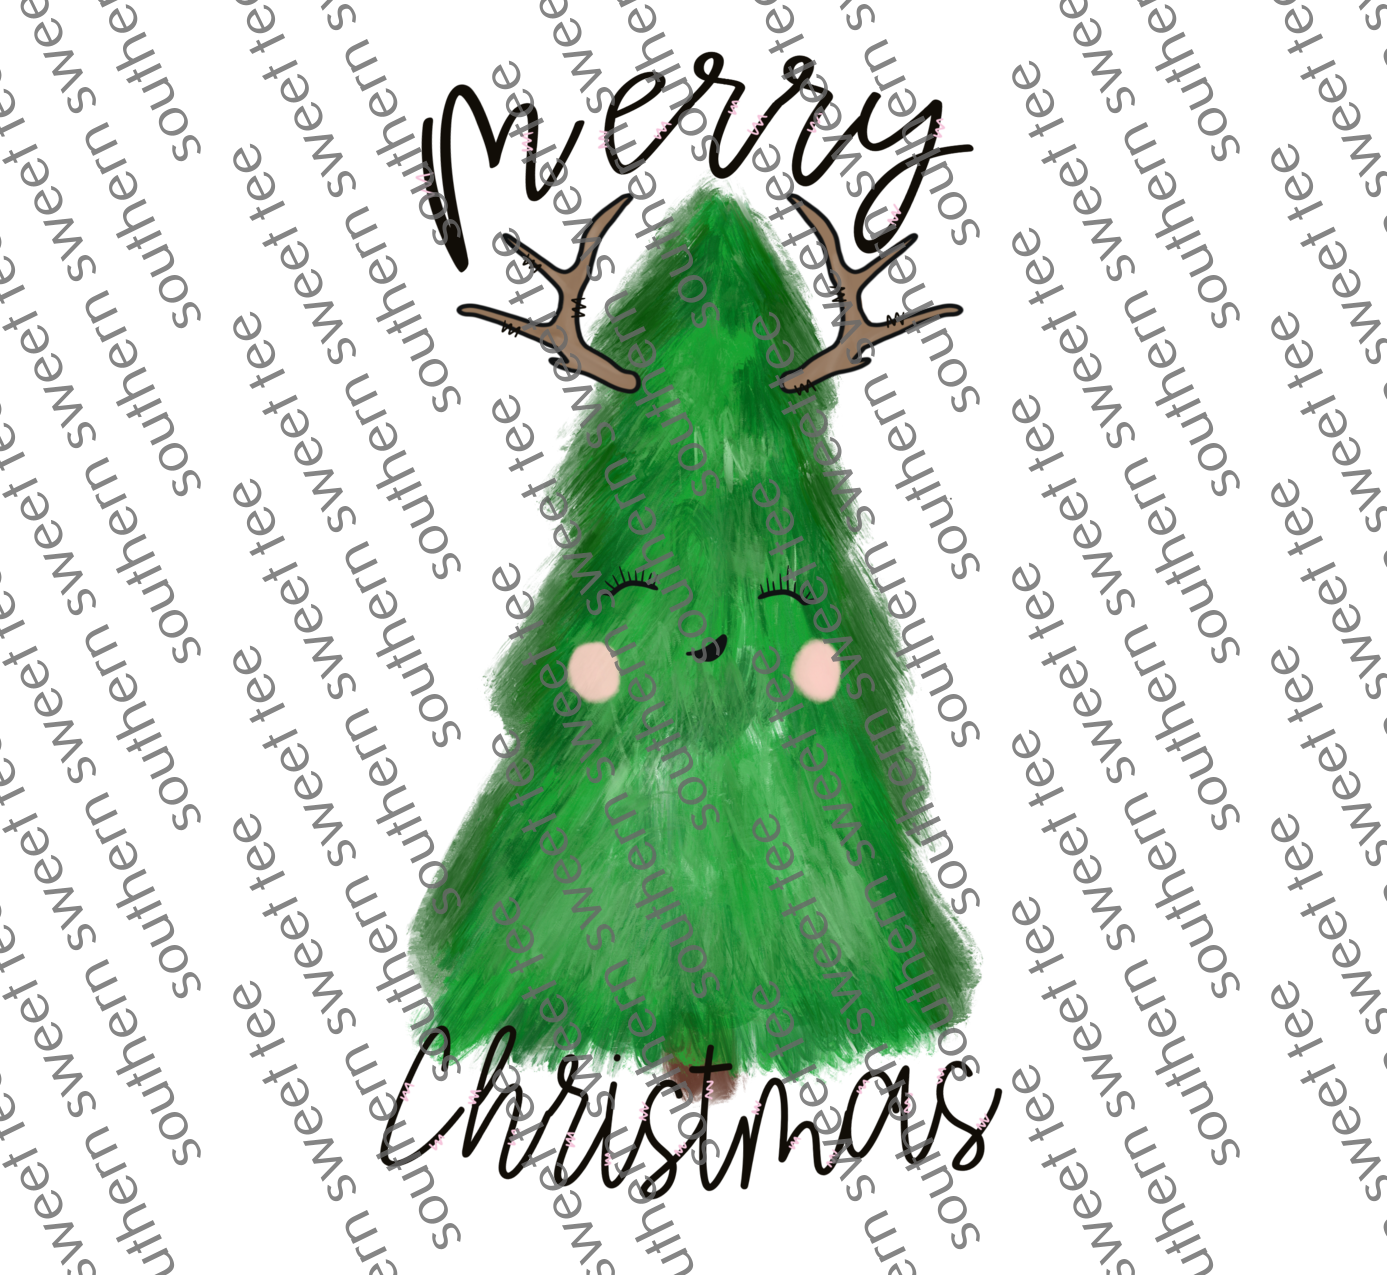 merry christmas antler tree.dtd/nov